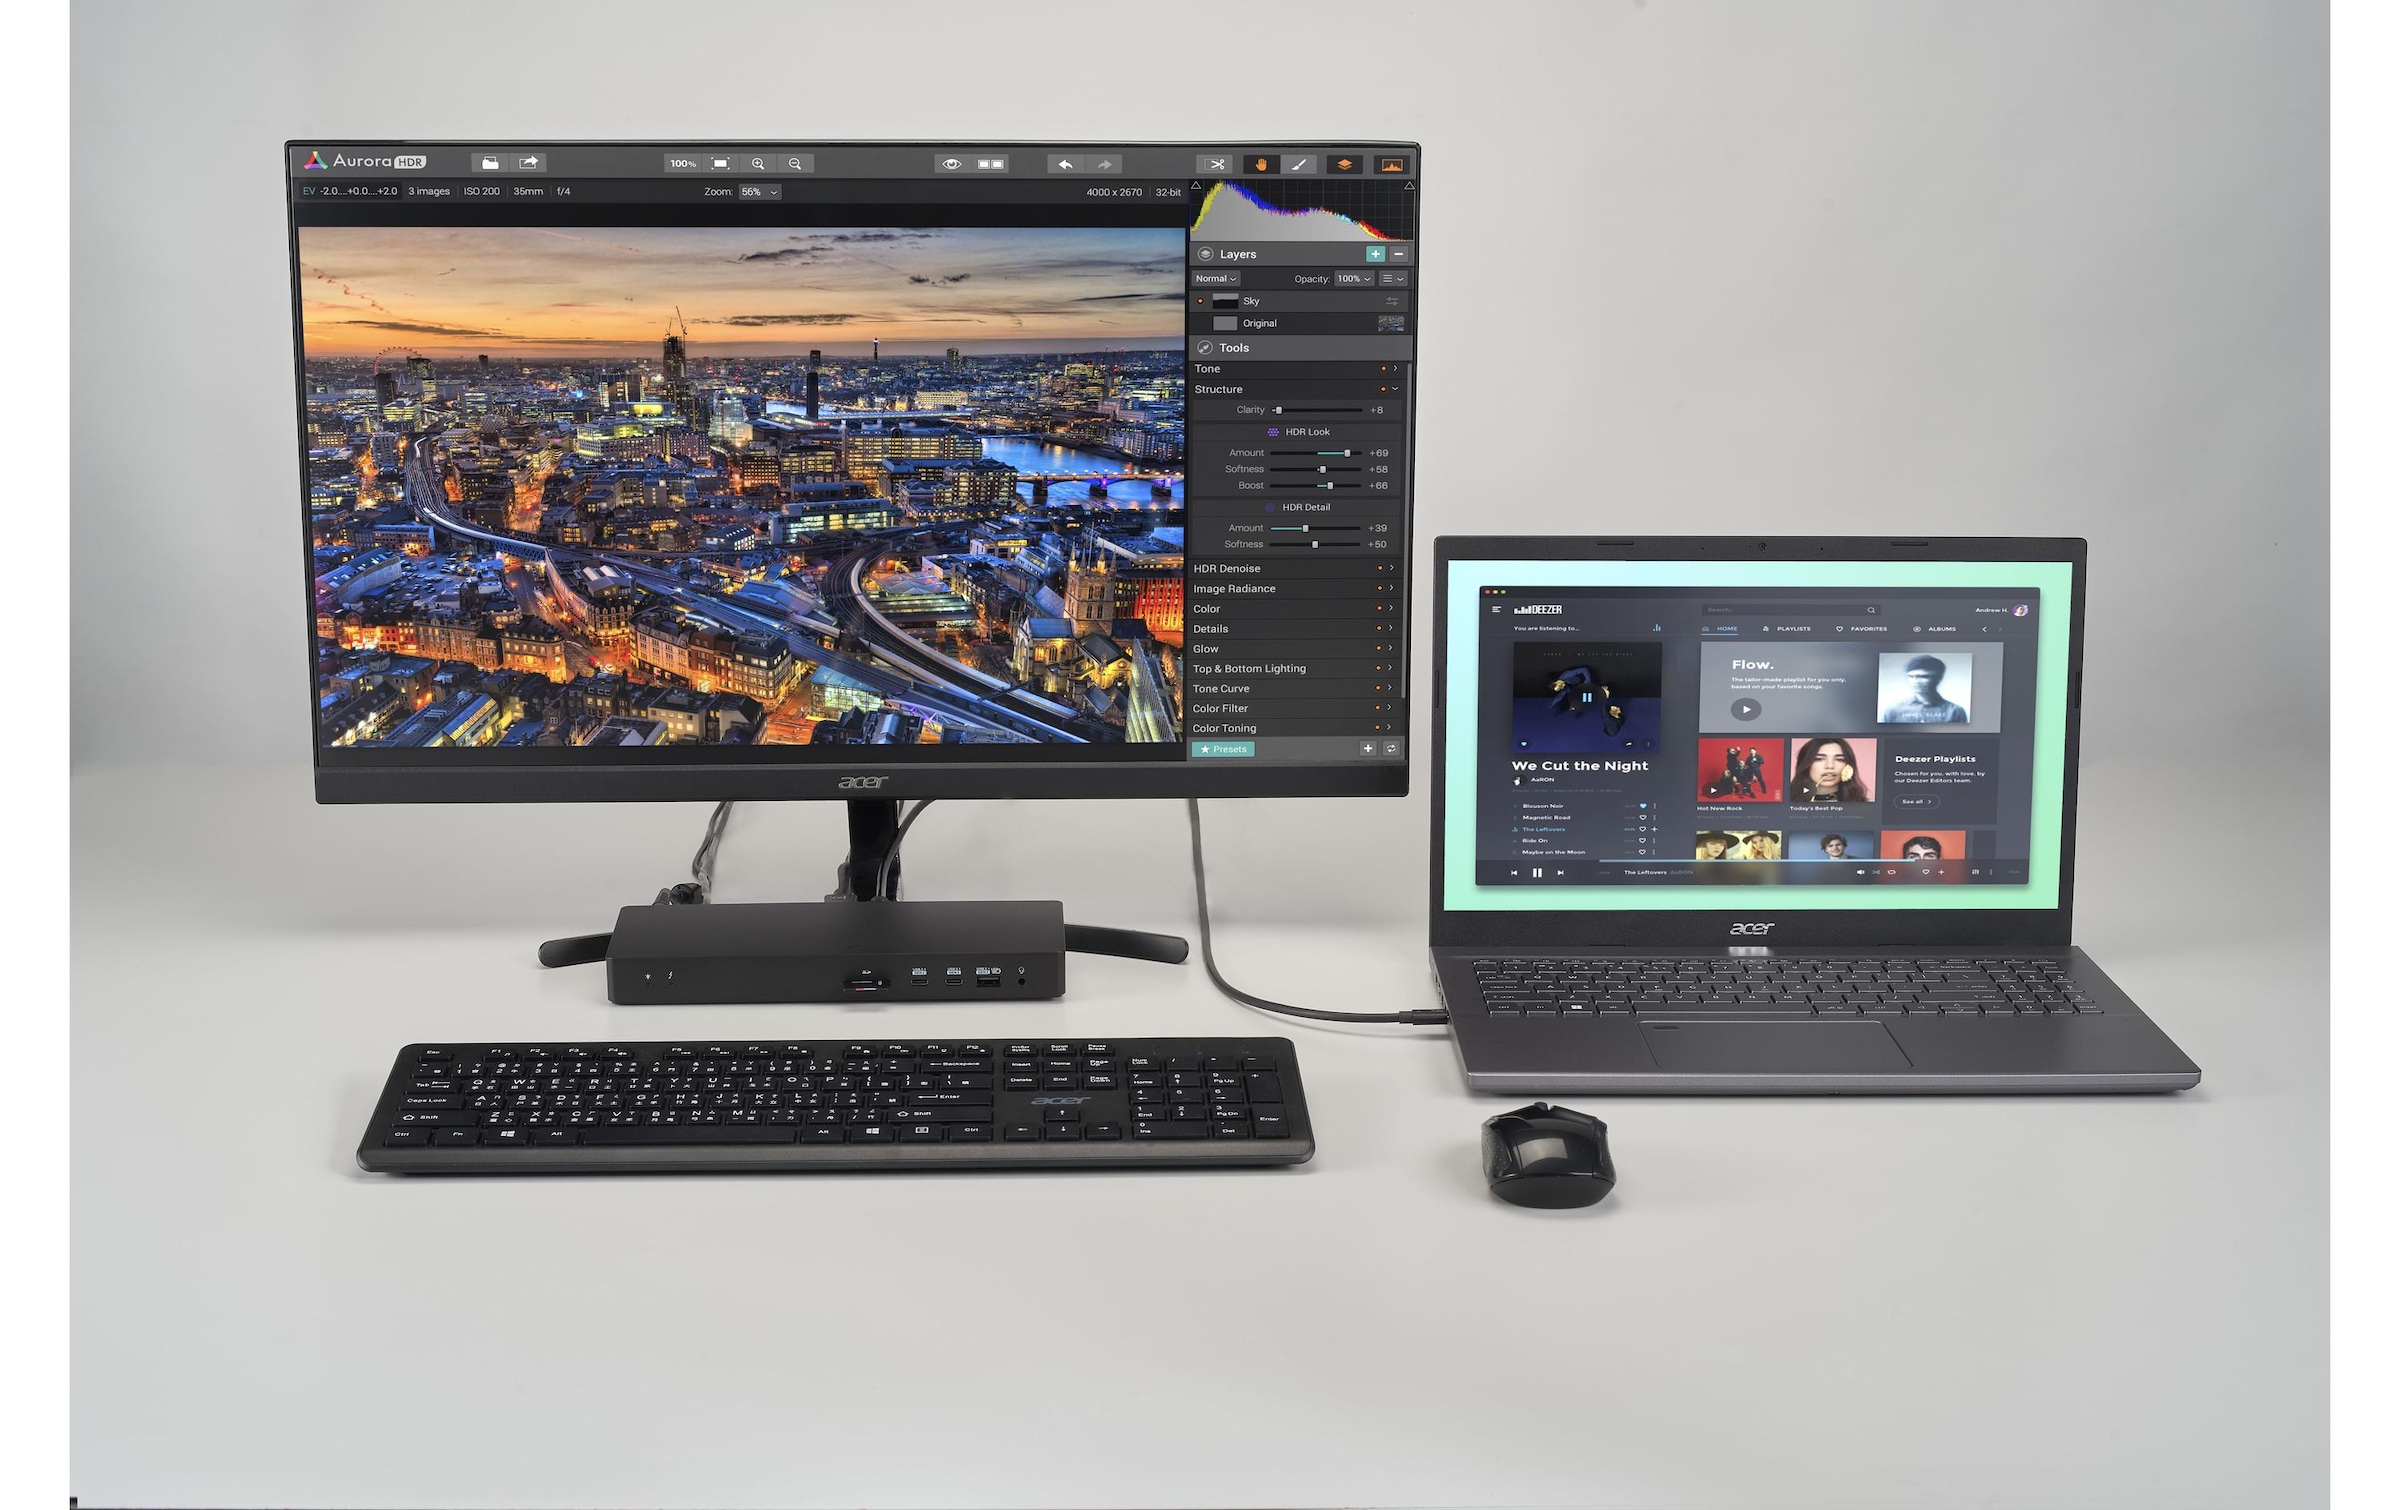 Acer Laptop-Dockingstation »Thunderbolt 4 Dock T701«